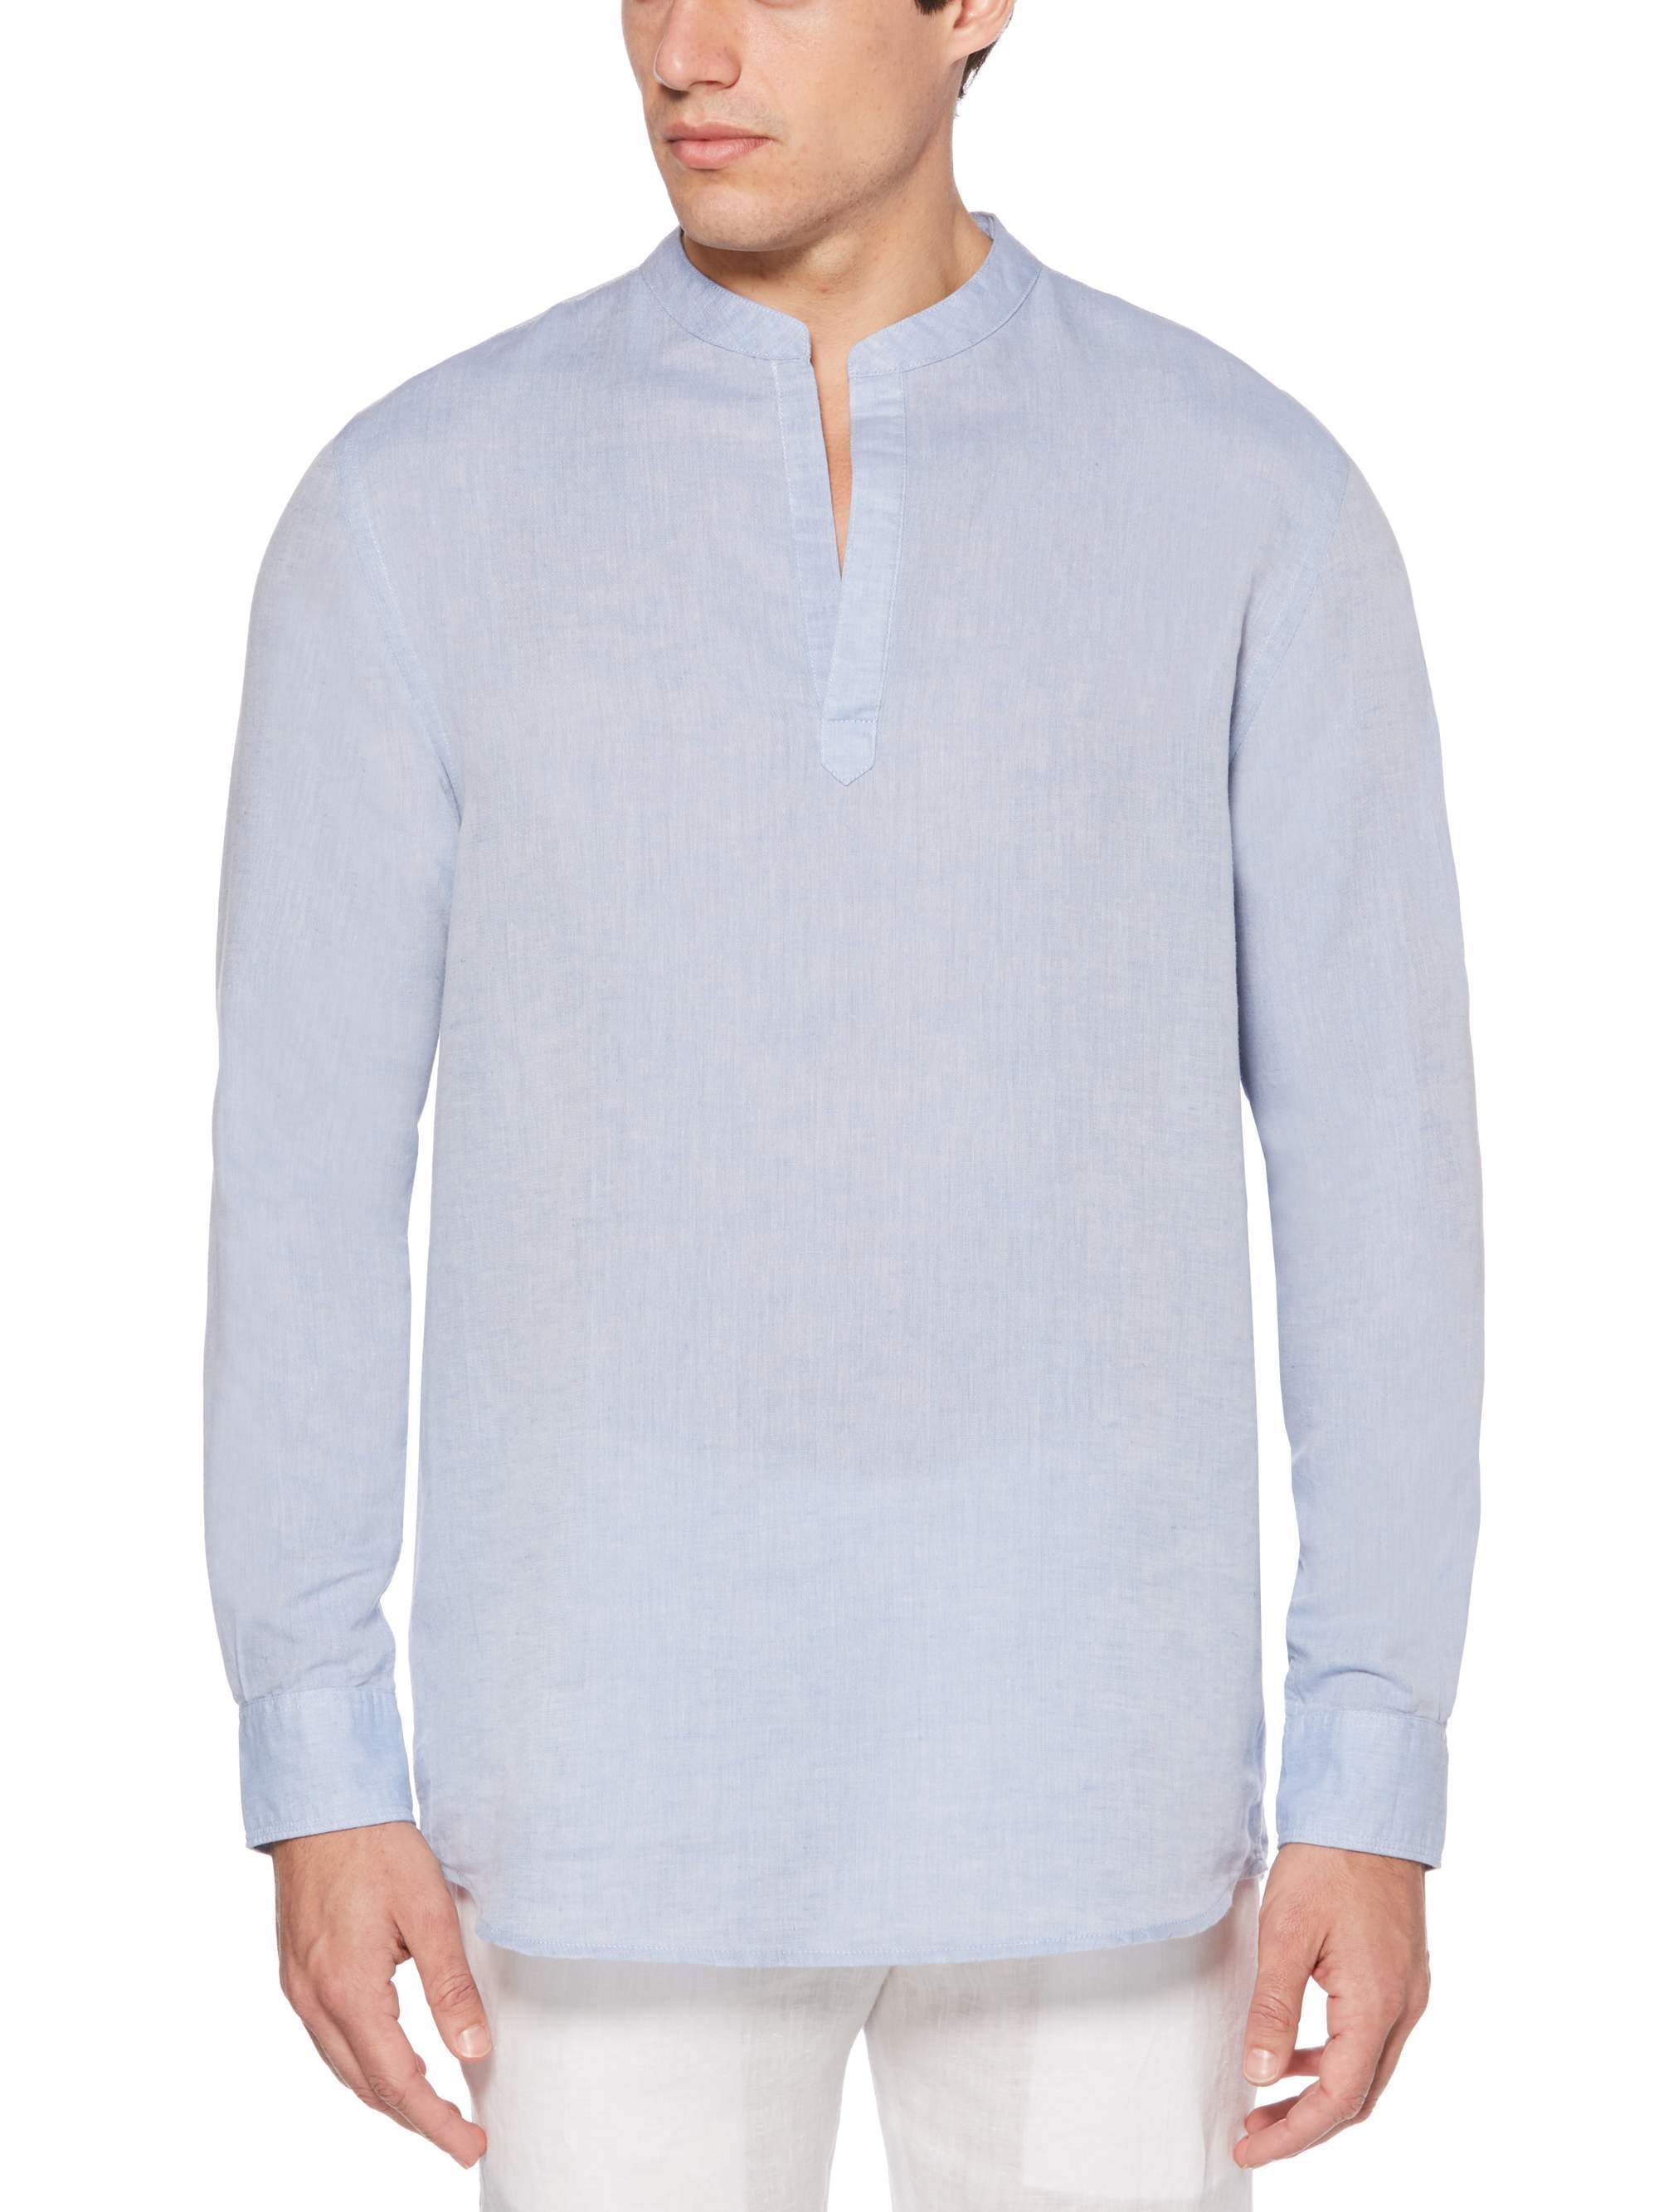 Long-Sleeve Solid Linen Cotton Popover Shirt - Walmart.com